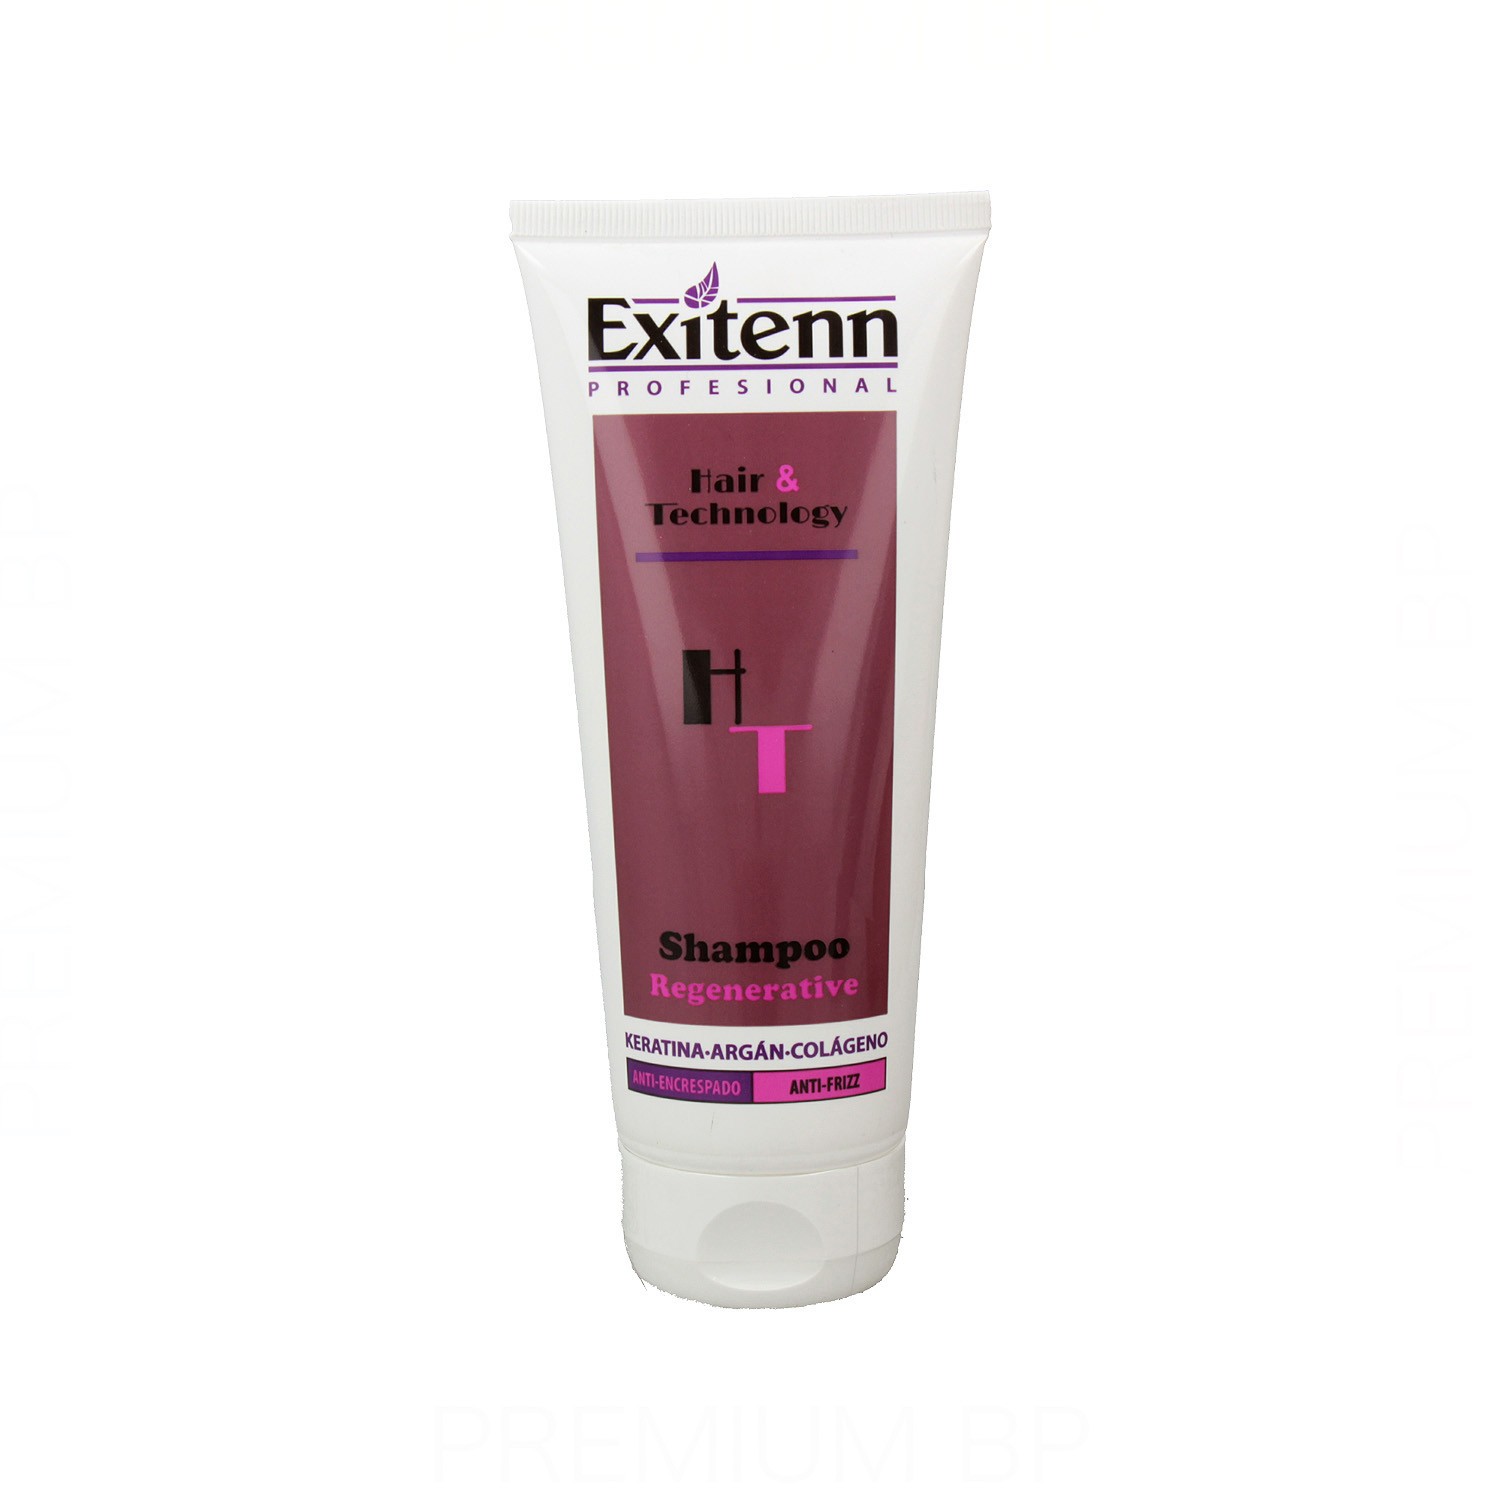 Exitenn - Exitenn hair technology regenerative champú 250 ml, champú regenerador que aporta fuerza y brillo al cabello.